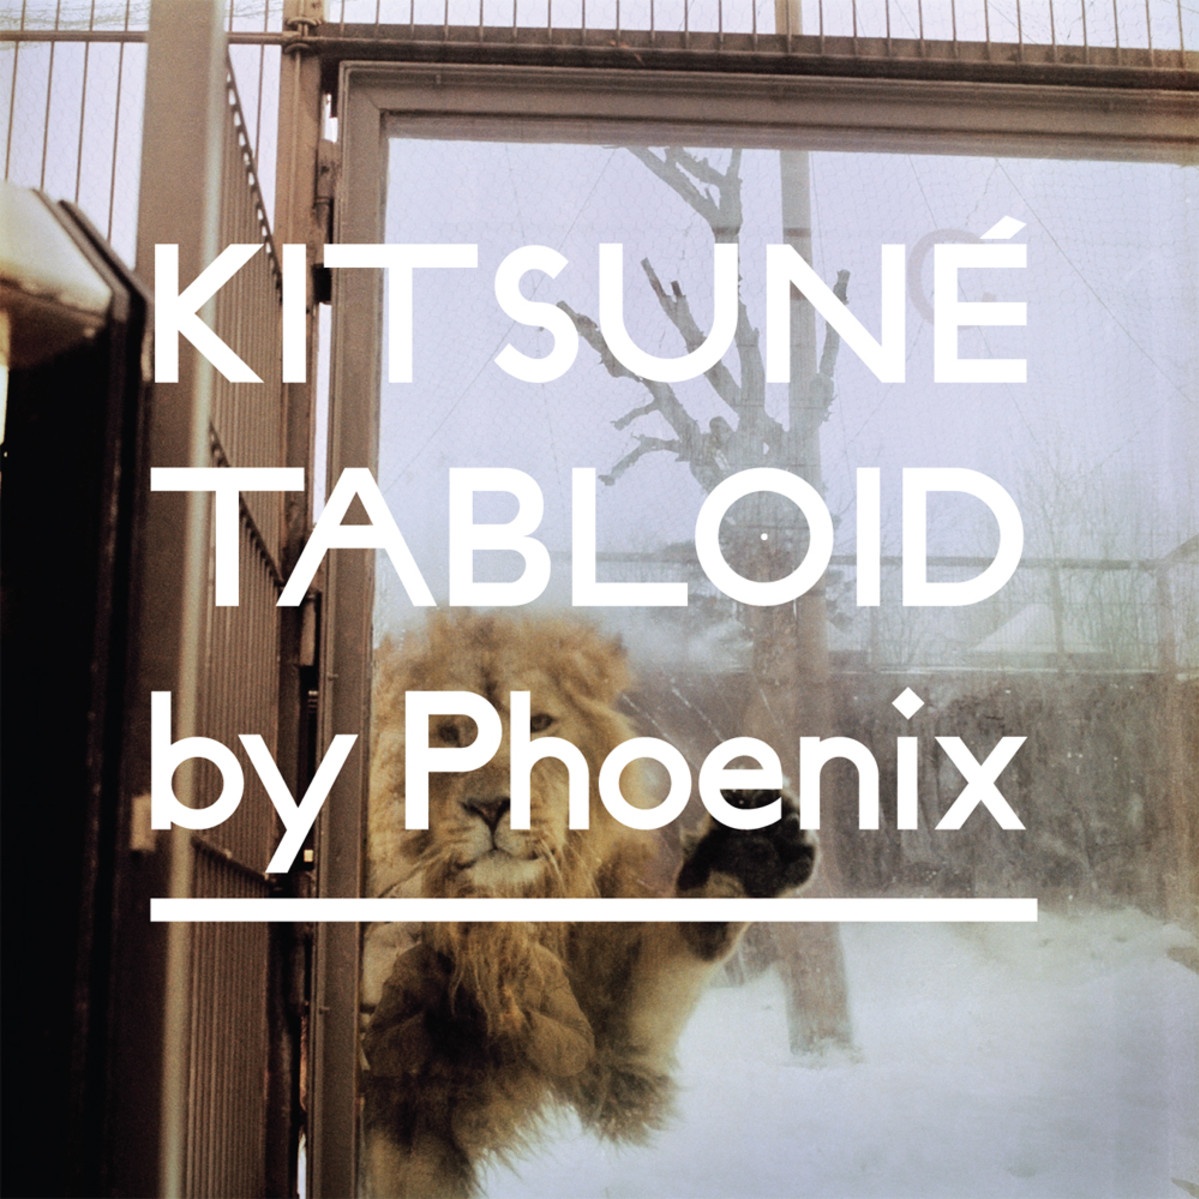 Kitsune Tabloid By Phoenix